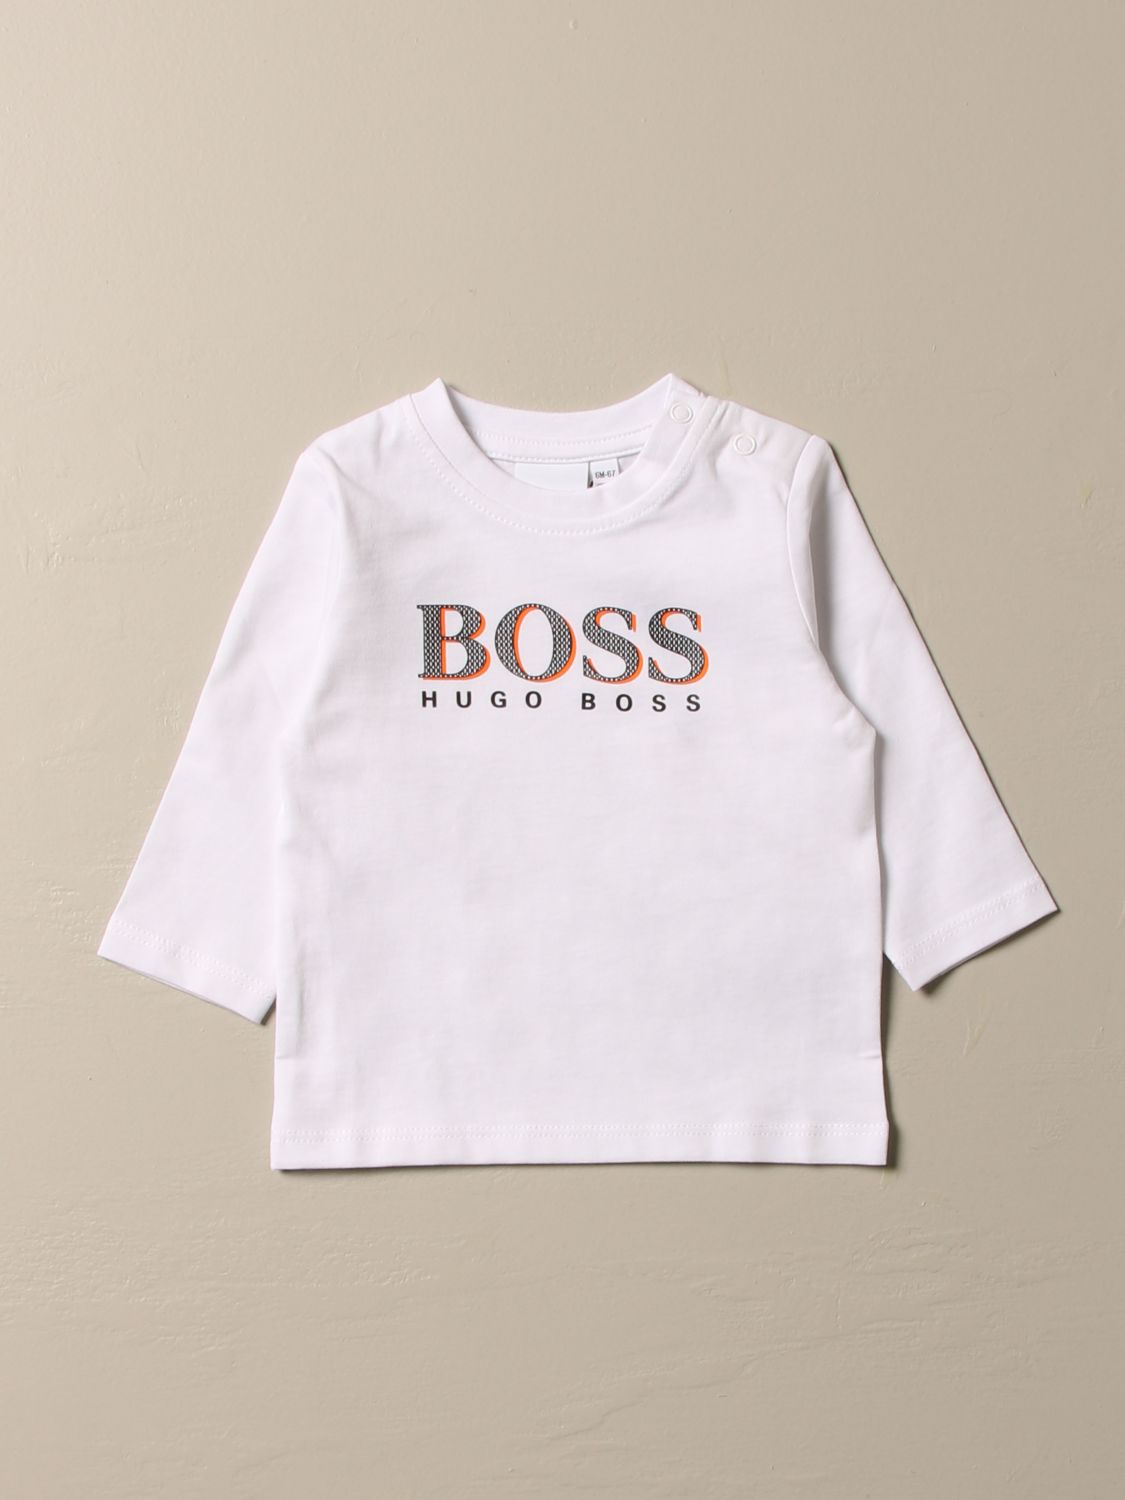 hugo boss baby clothes uk